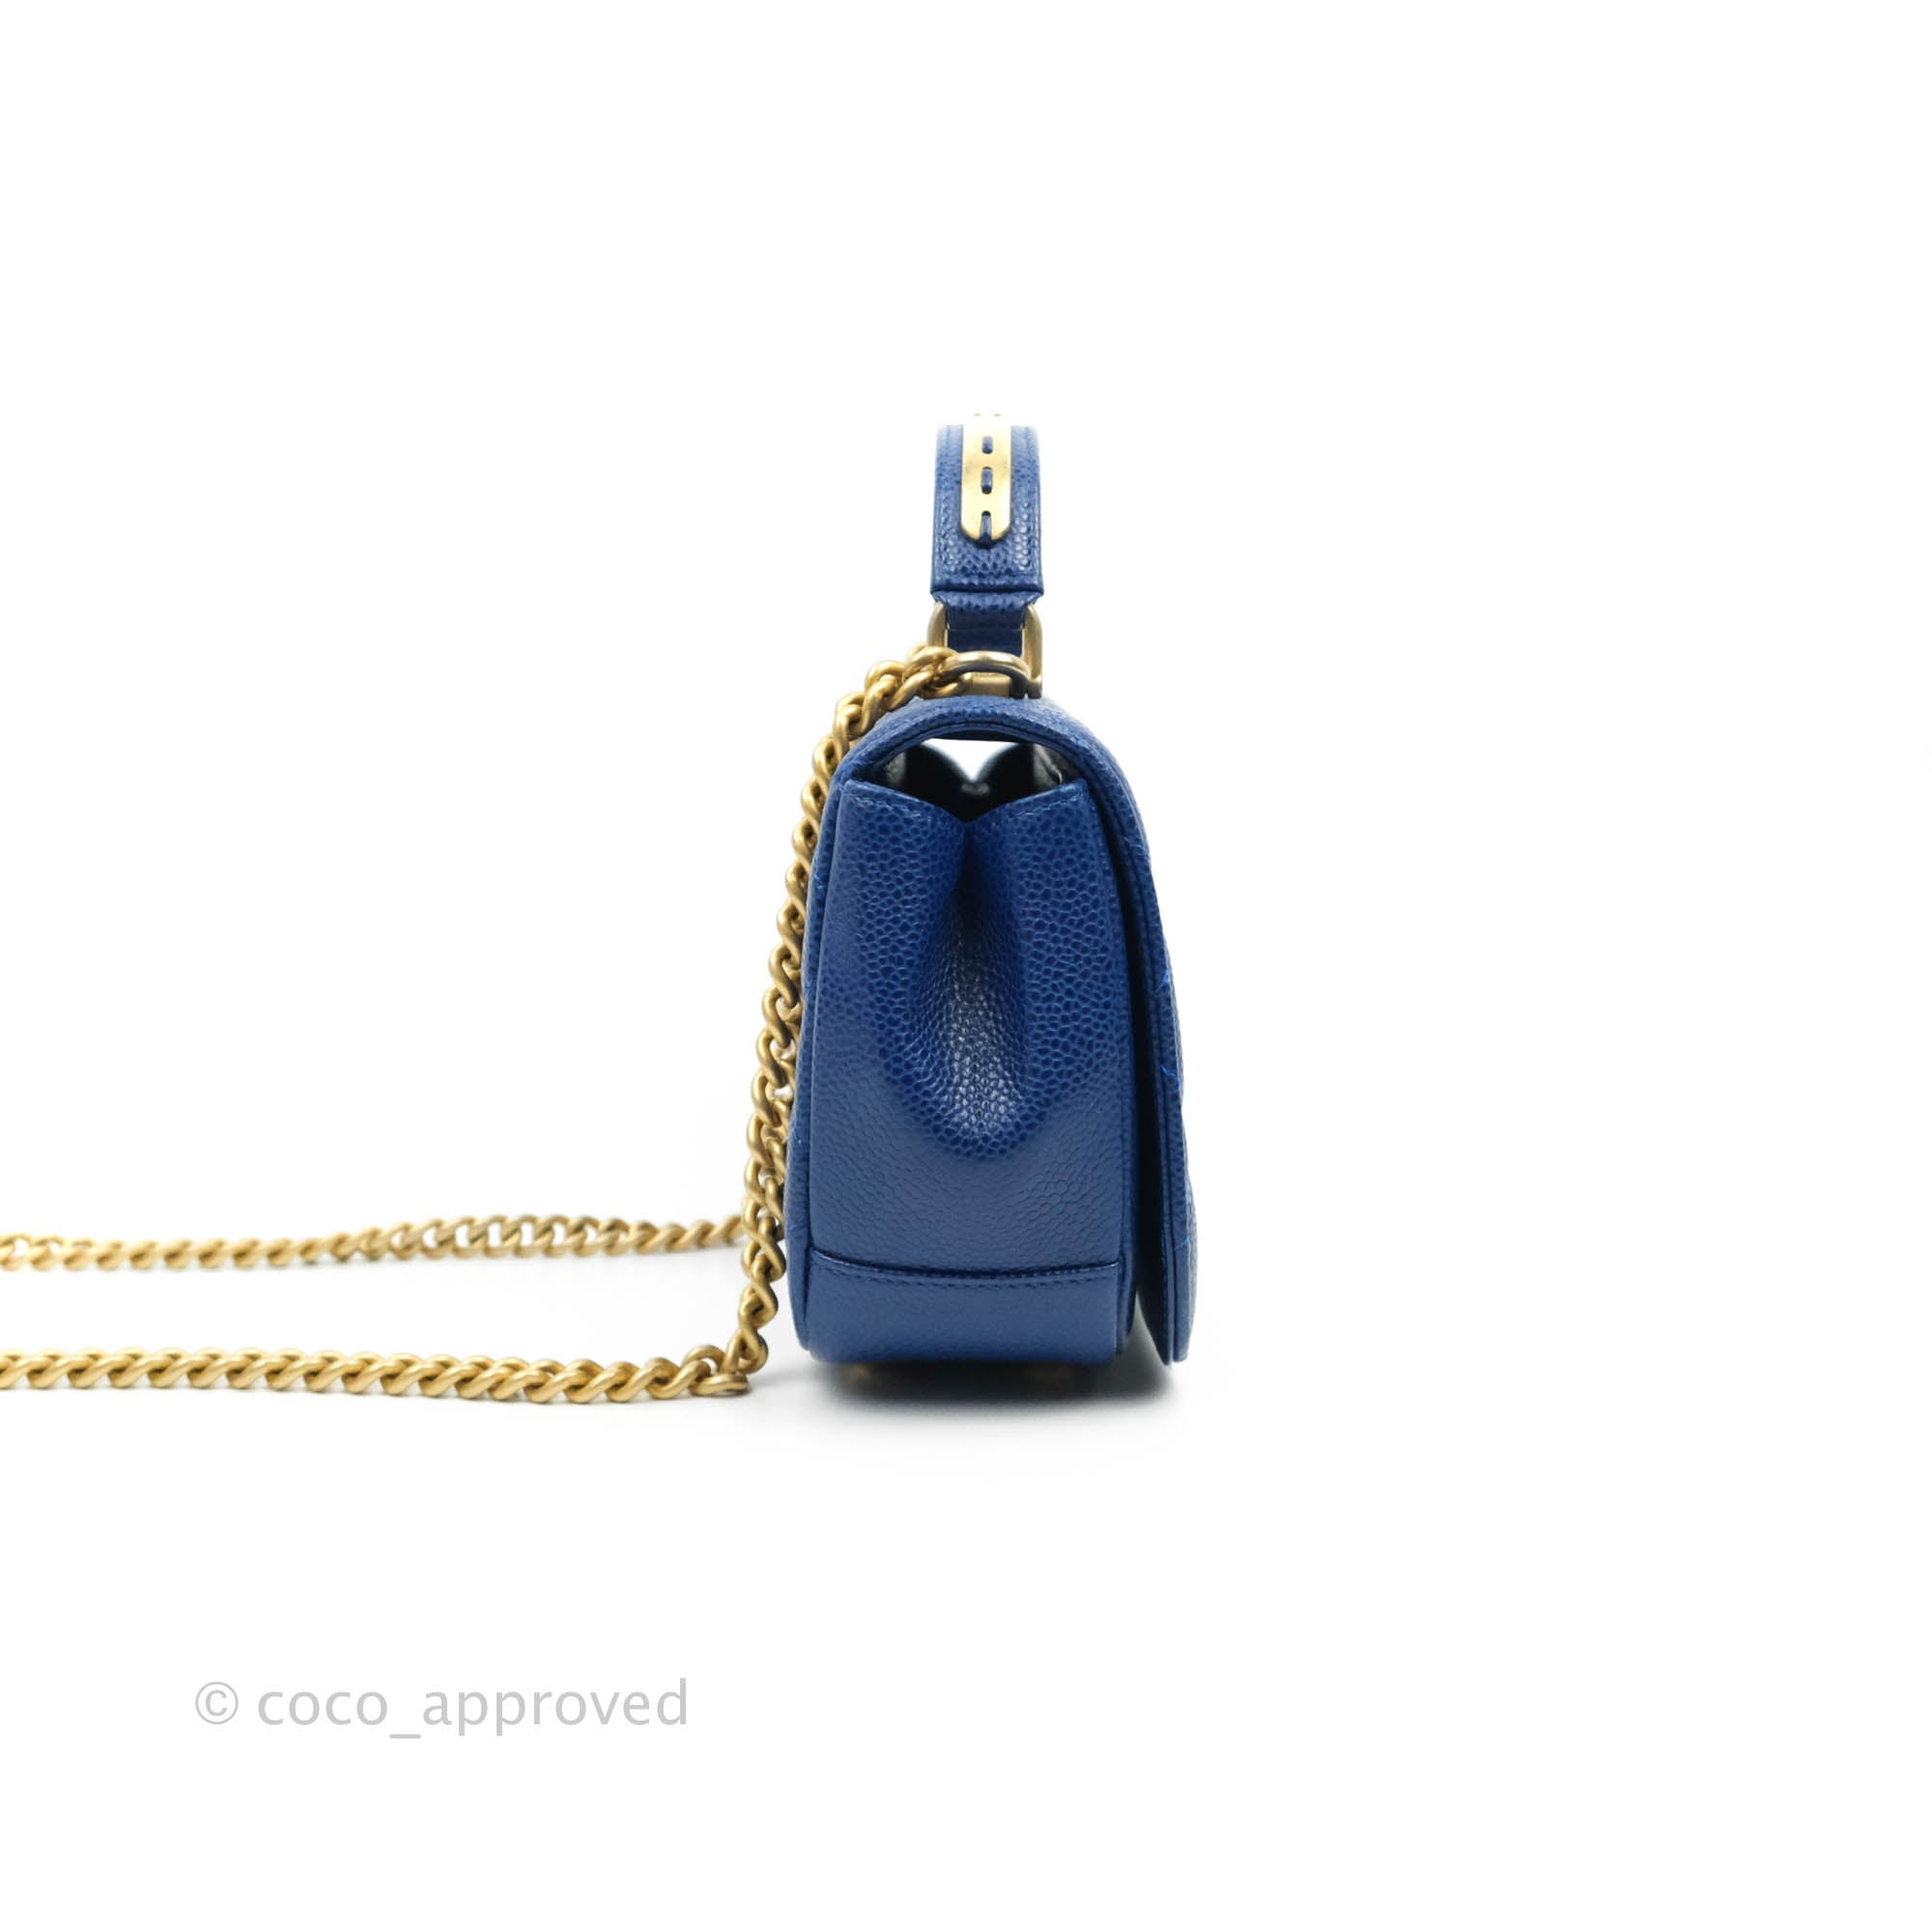 Chanel Mini Flap Bag AS4263 B13696 NQ337, Blue, One Size